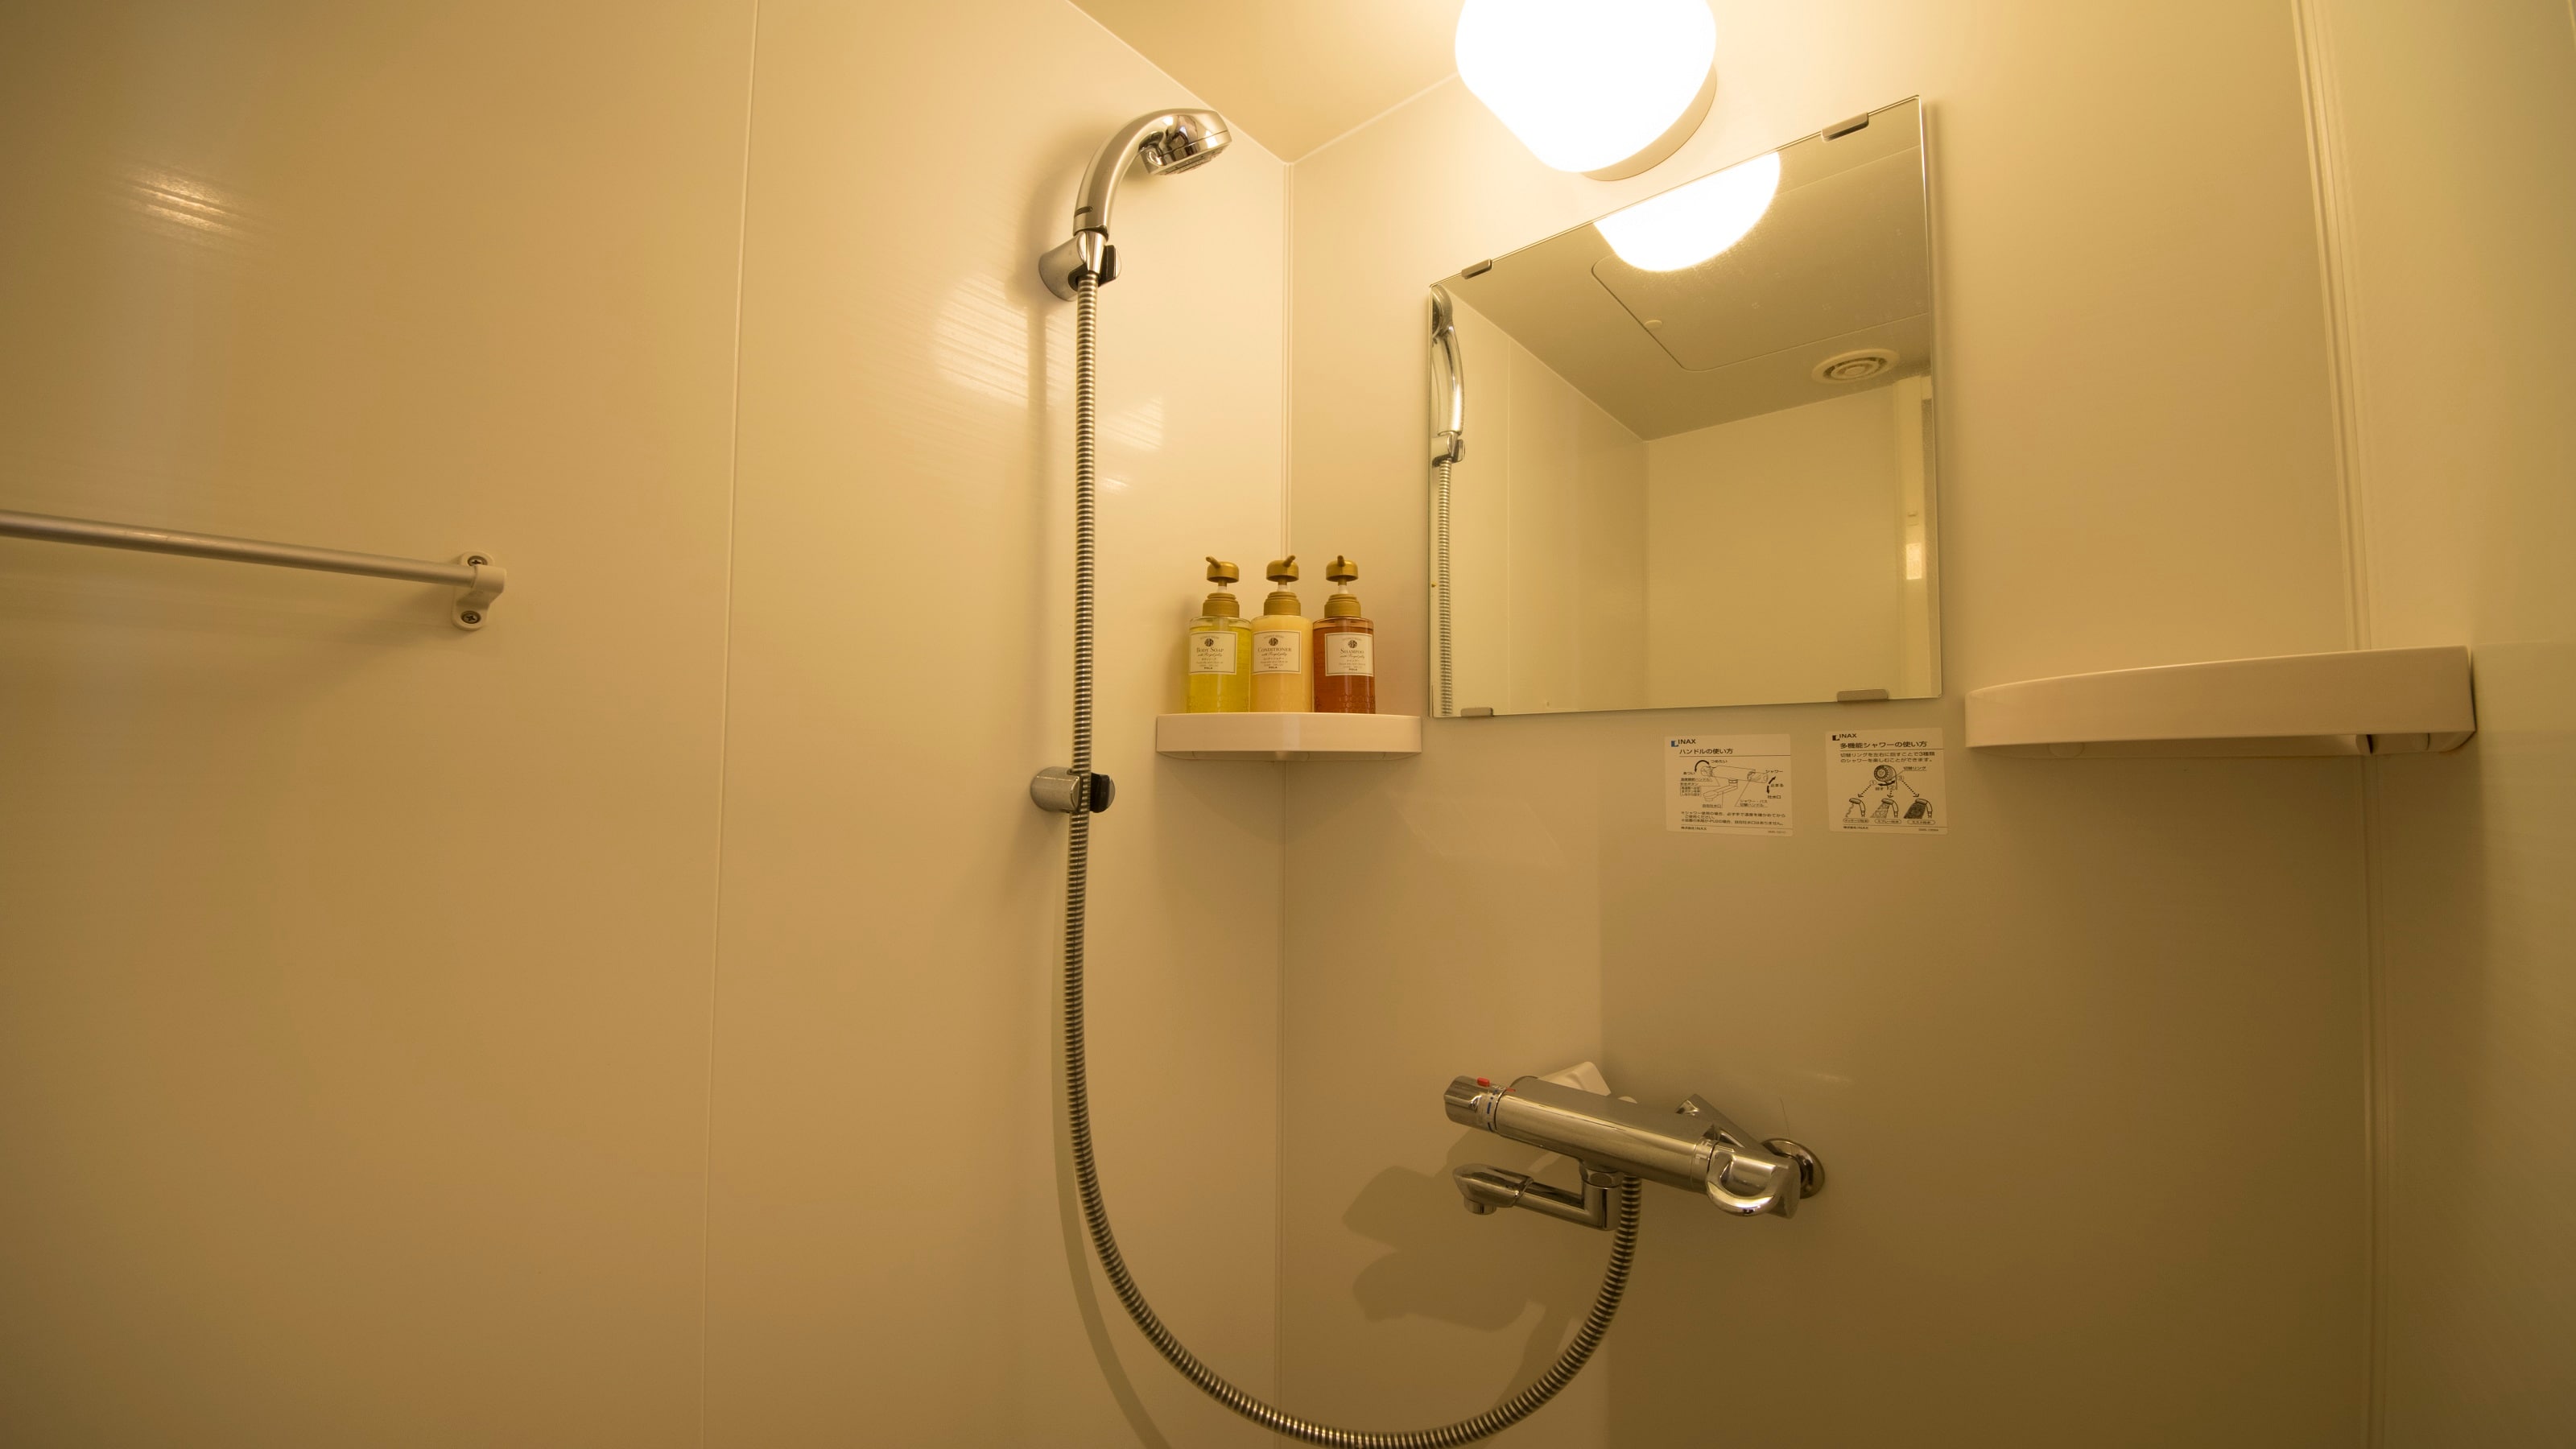 ■ Shower room (single / double room)